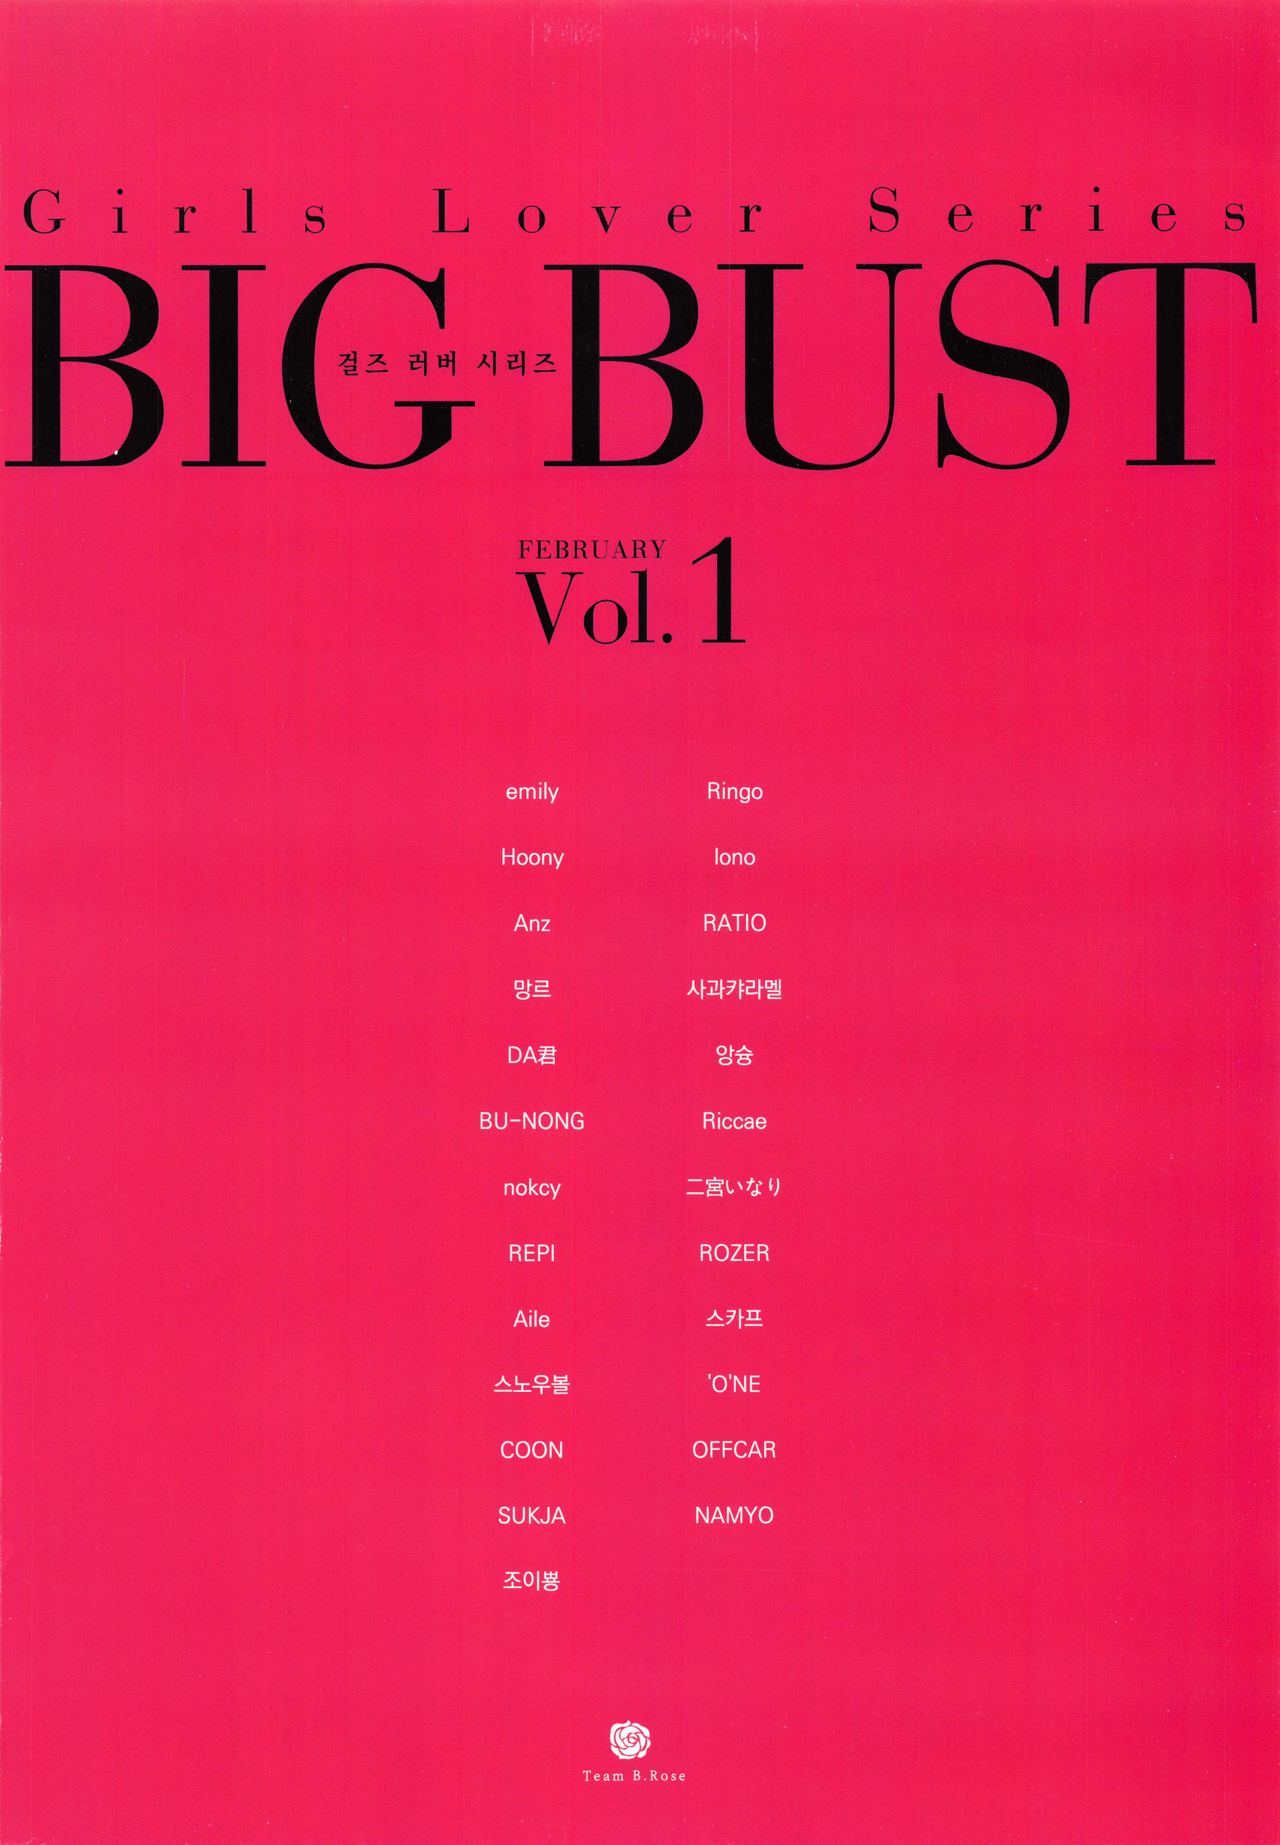 [Team B.Rose]Girls Lover Series BIG BUST Vol.1(korean) 